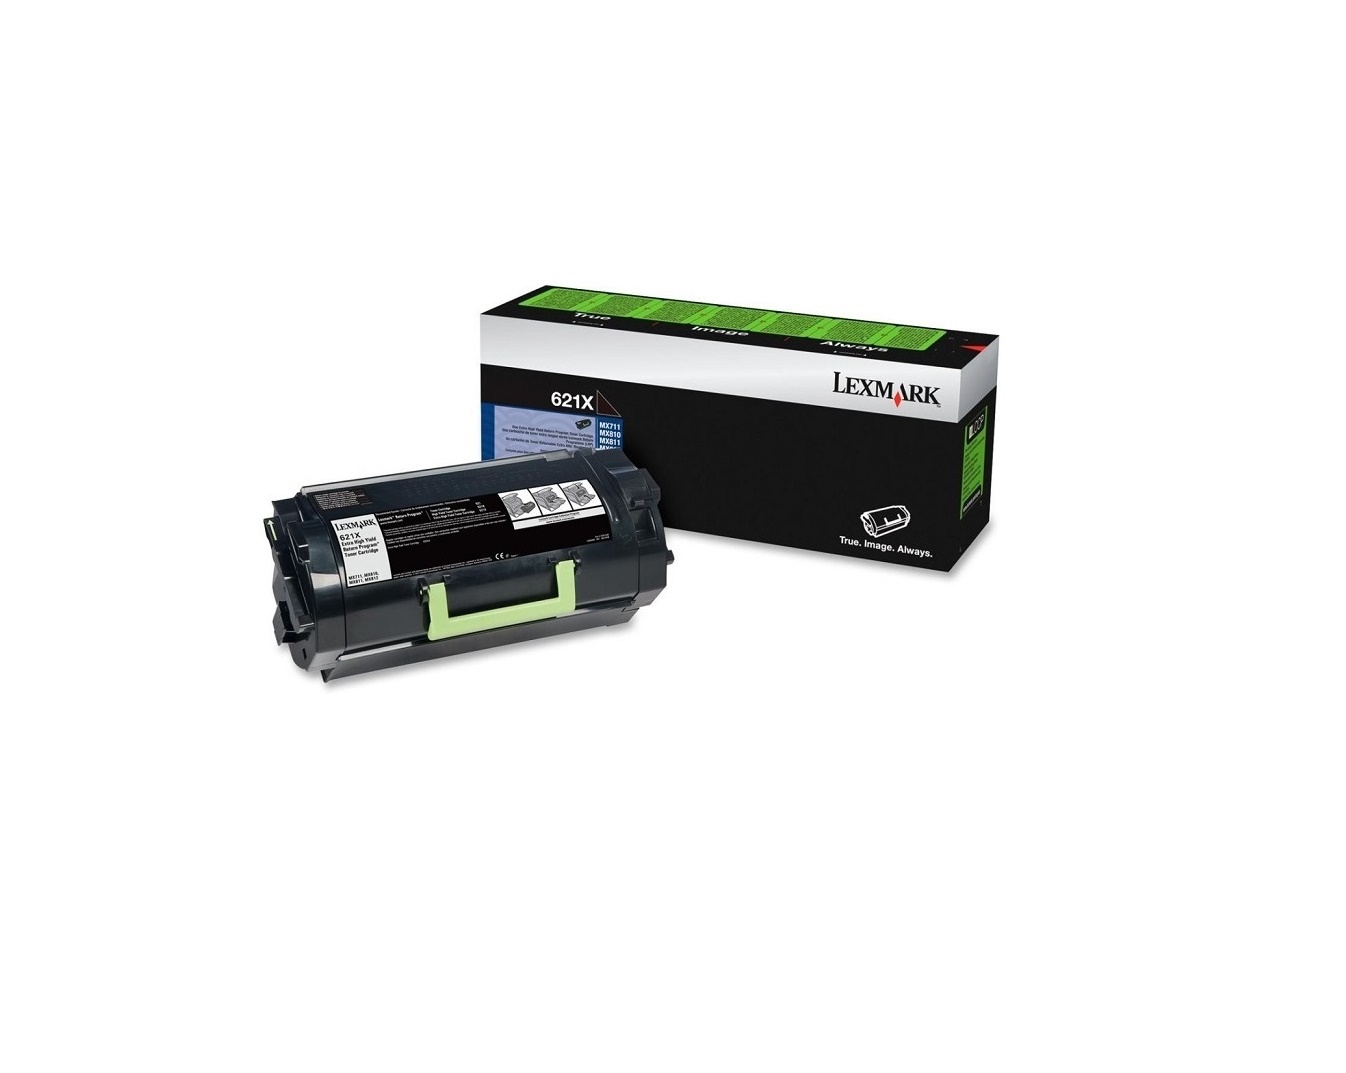 Lexmark Extra High 621X Toner Laser Cartridge Black 45000 Page 62D1X00